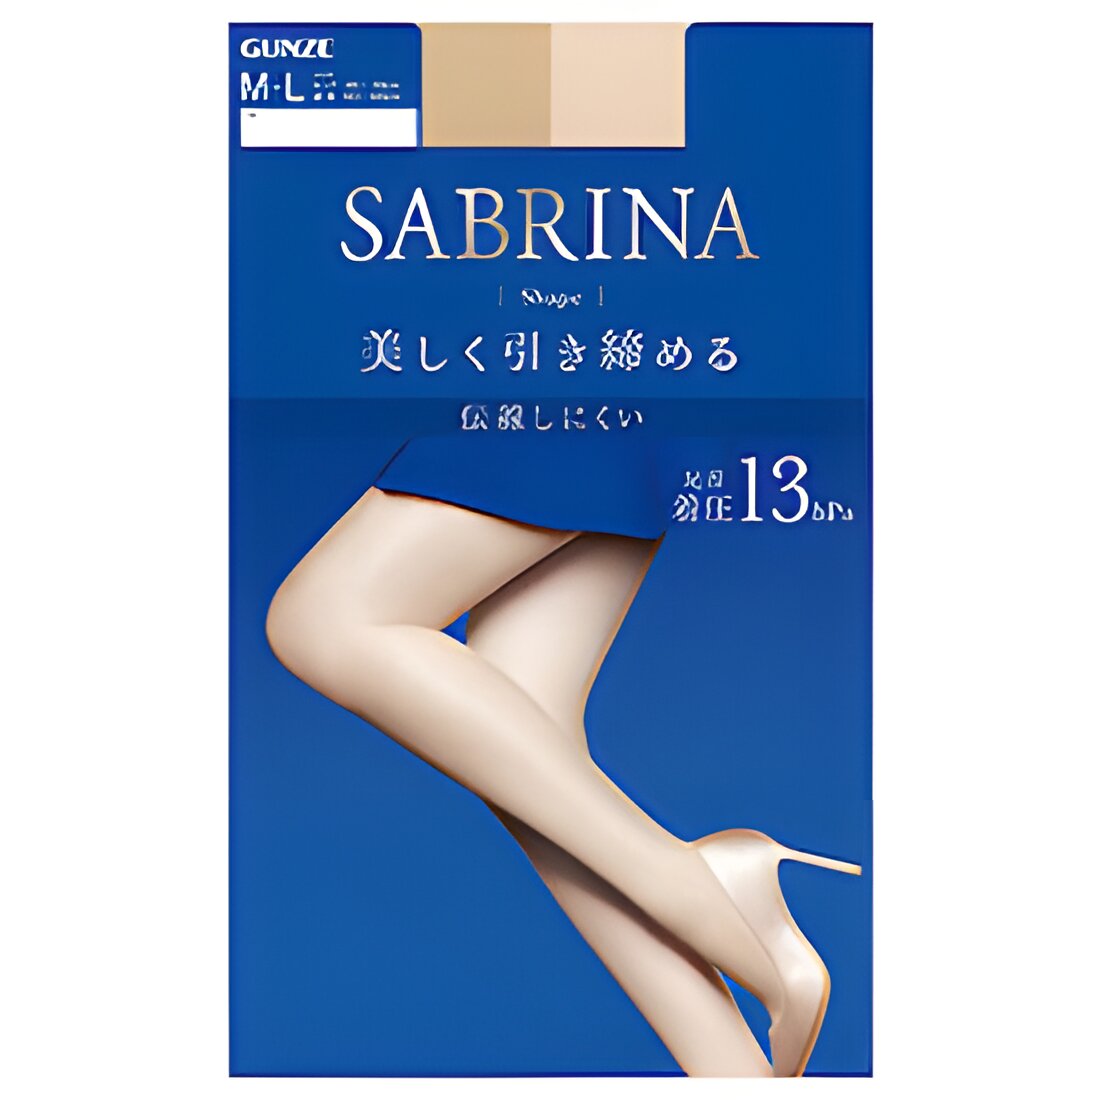 Free Pantyhose Samples From Sabrina